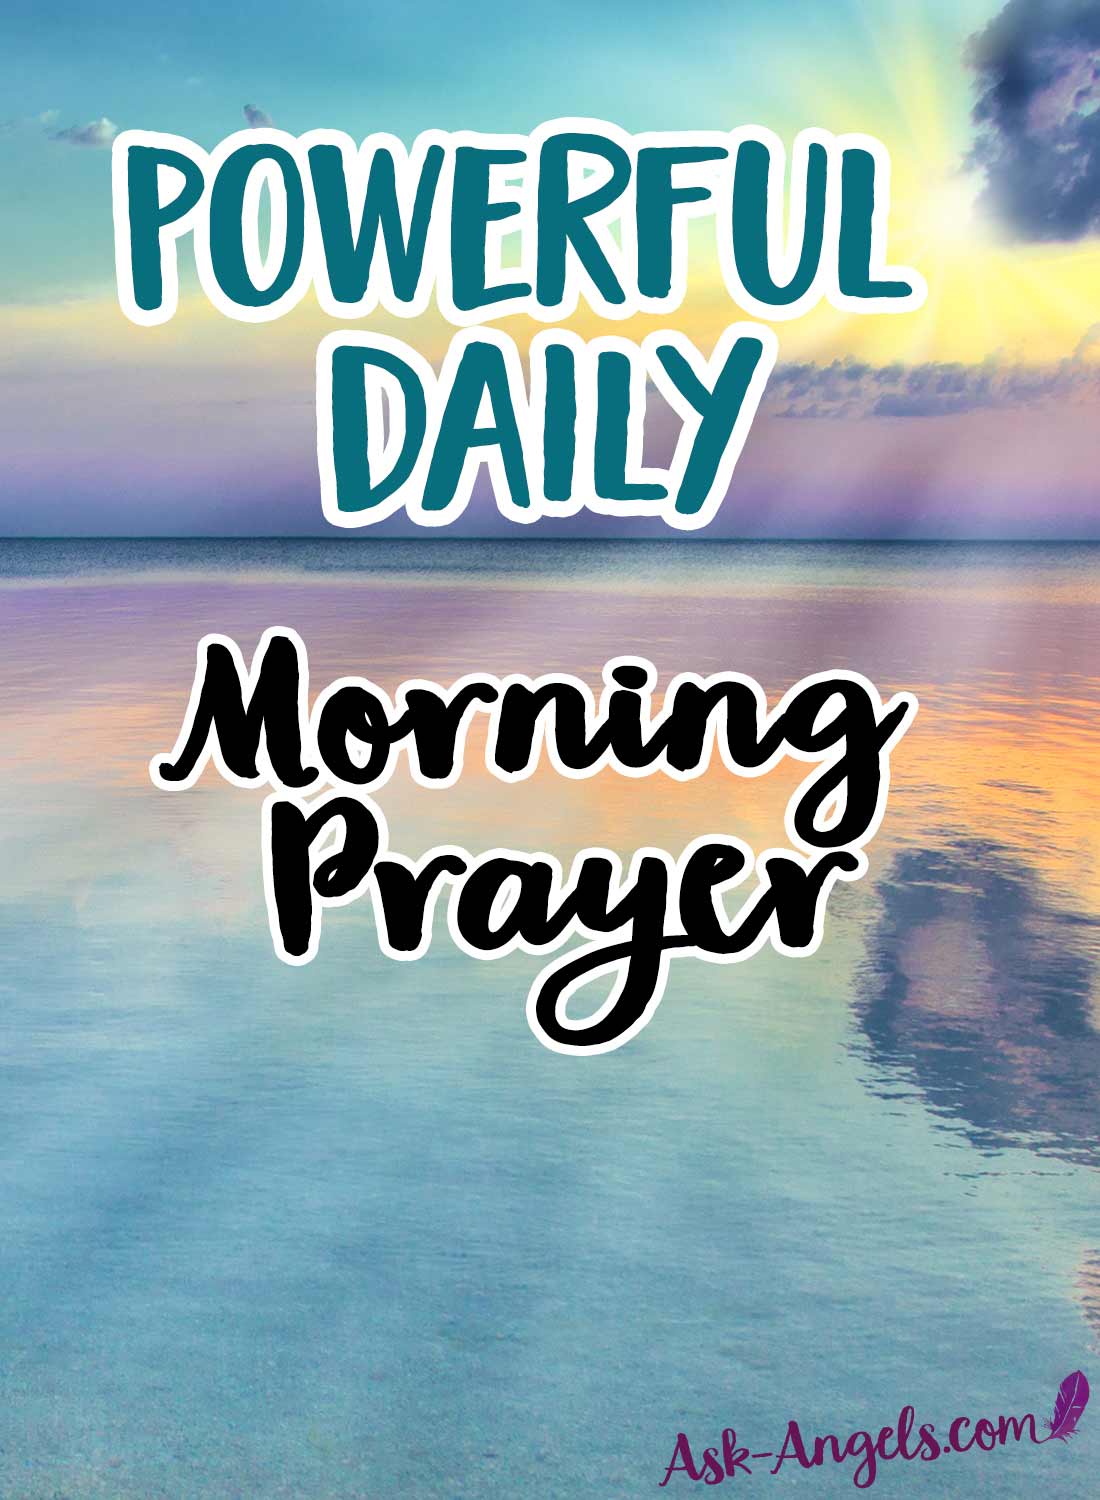 Powerful Daily Morning Prayer